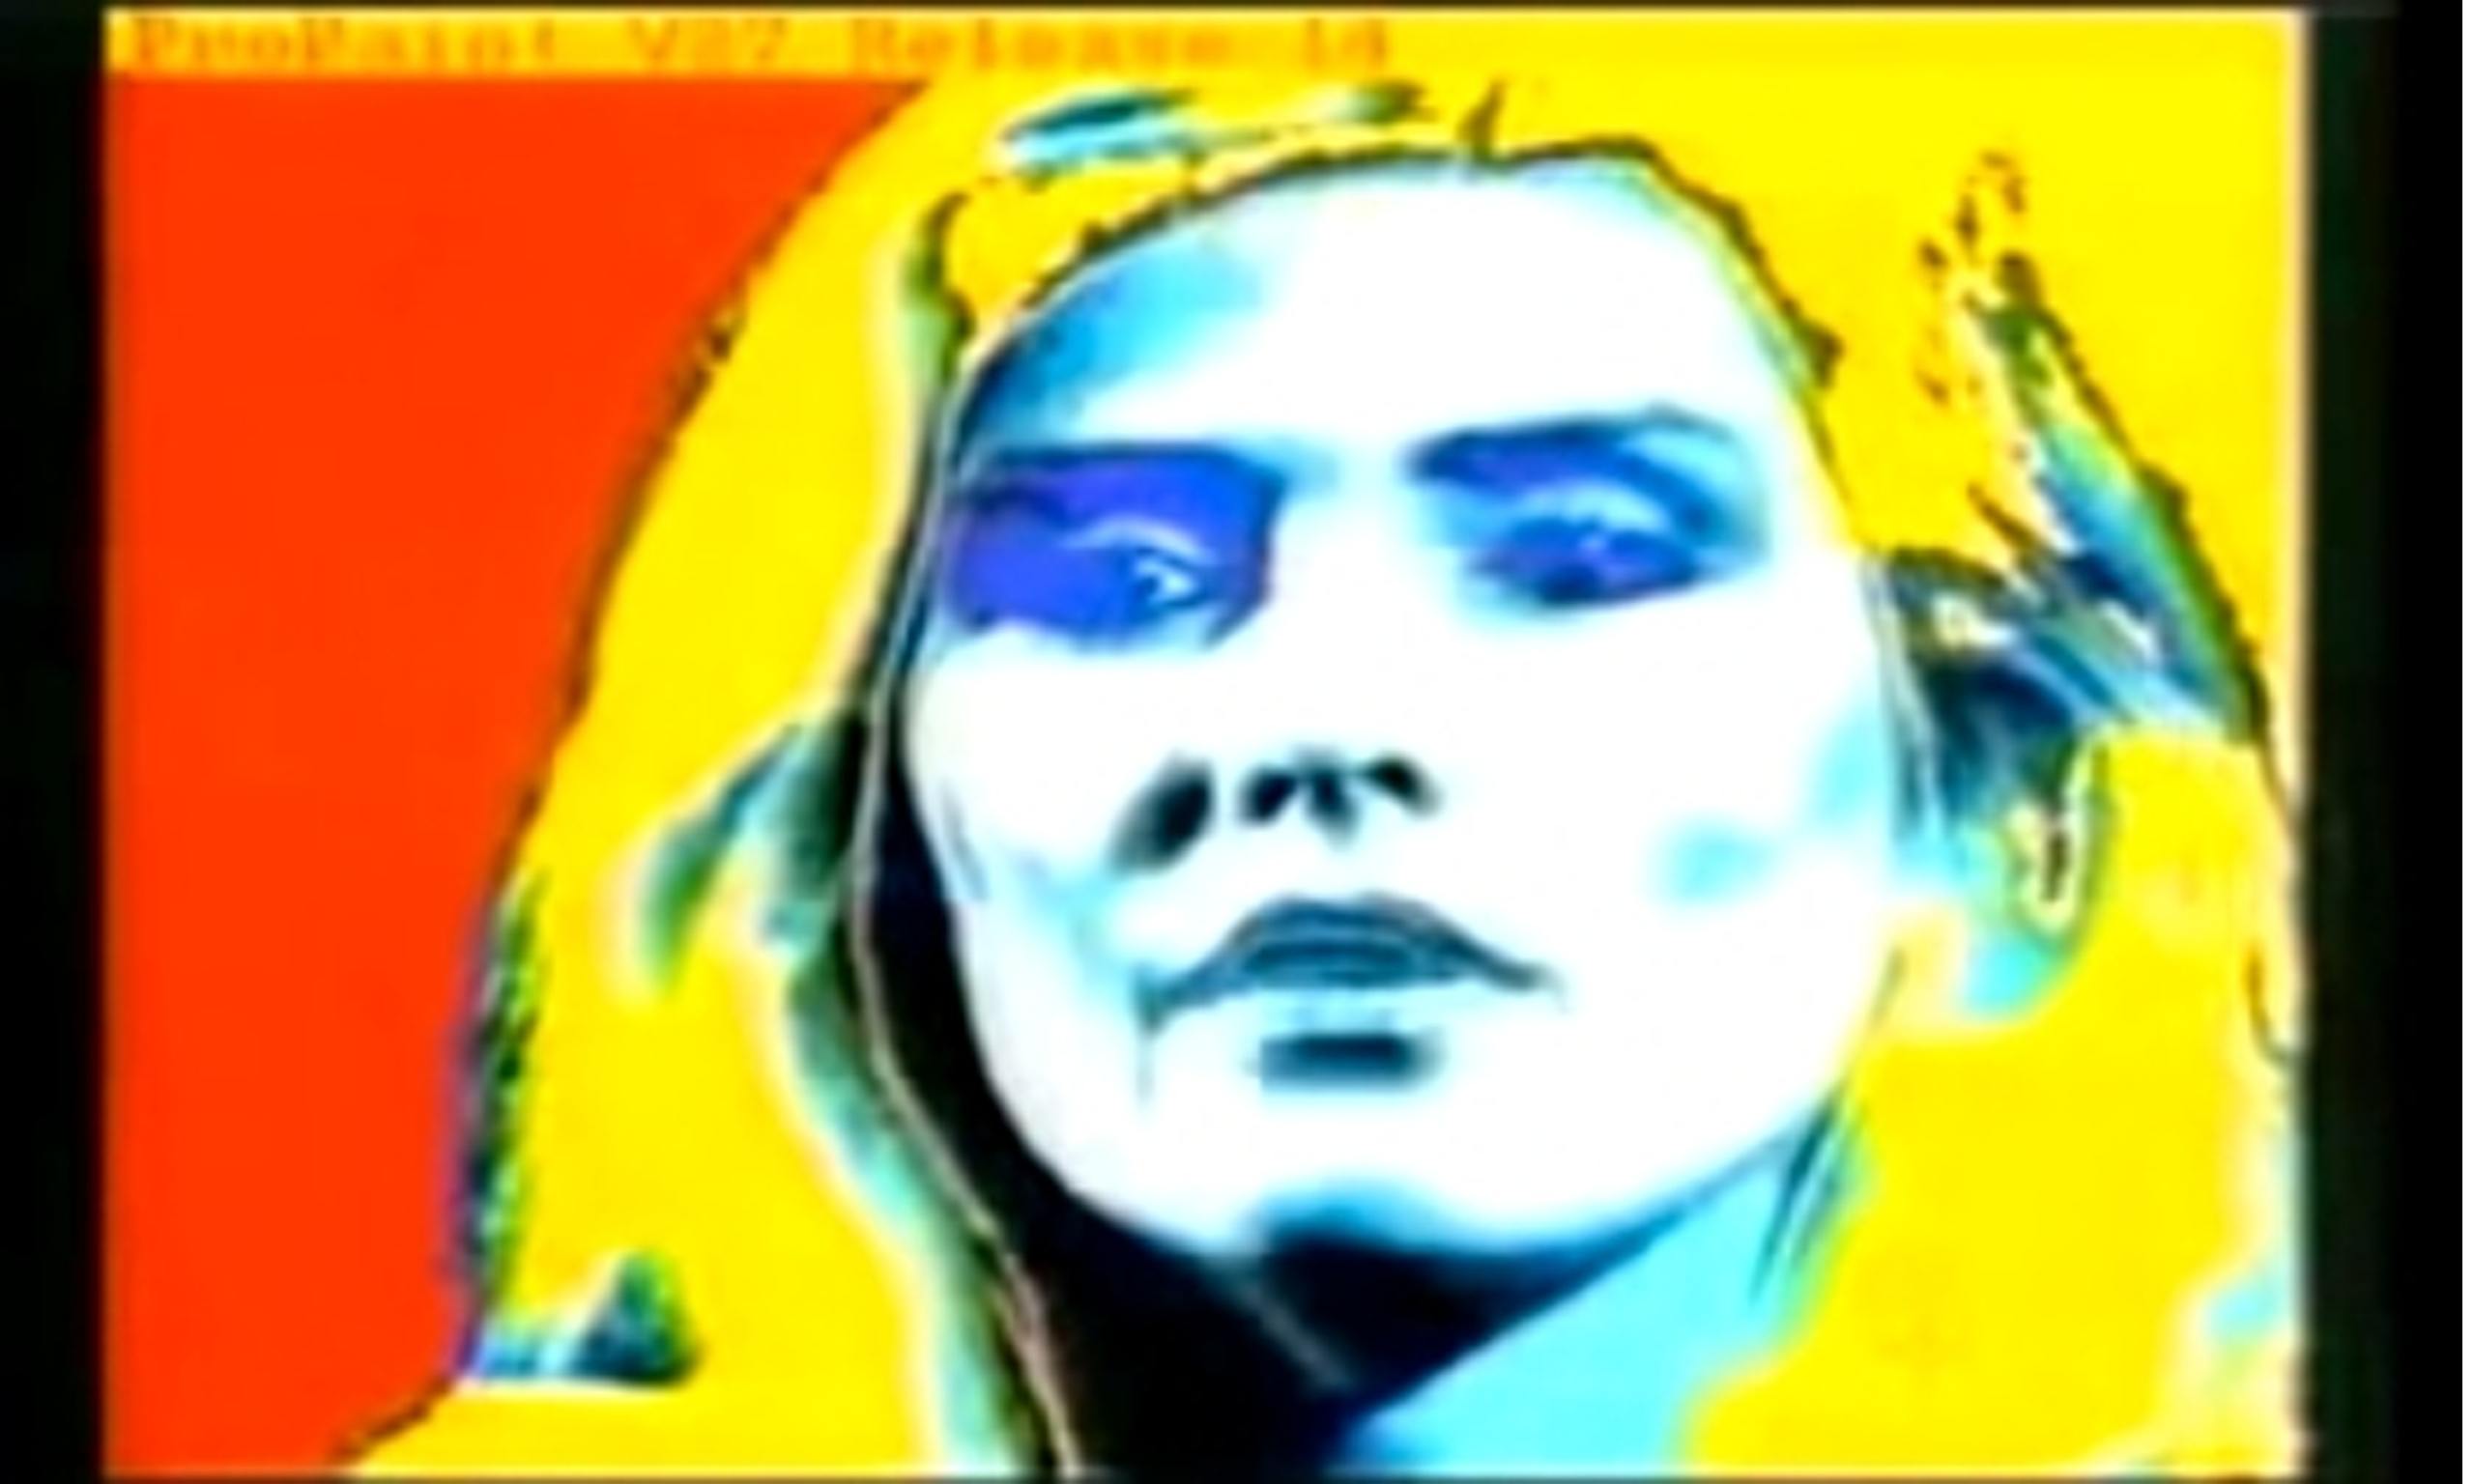 US computer club unveils Warhol digital art